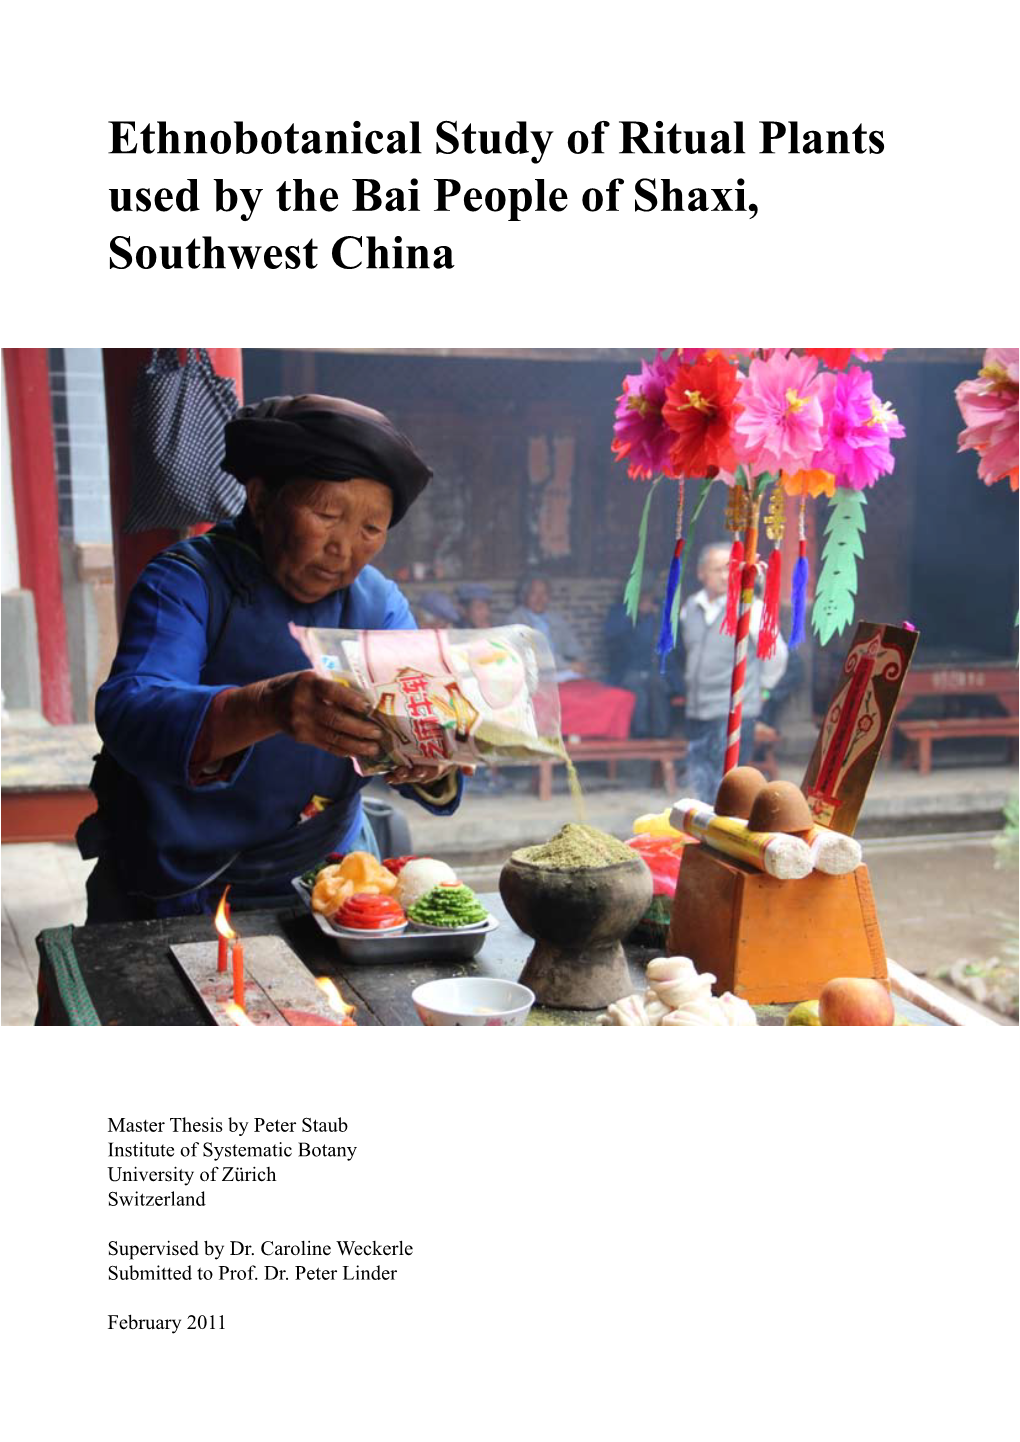 Ethnobotanical Study of Ritual Plants Used by the Bai People of Shaxi, Southwest China